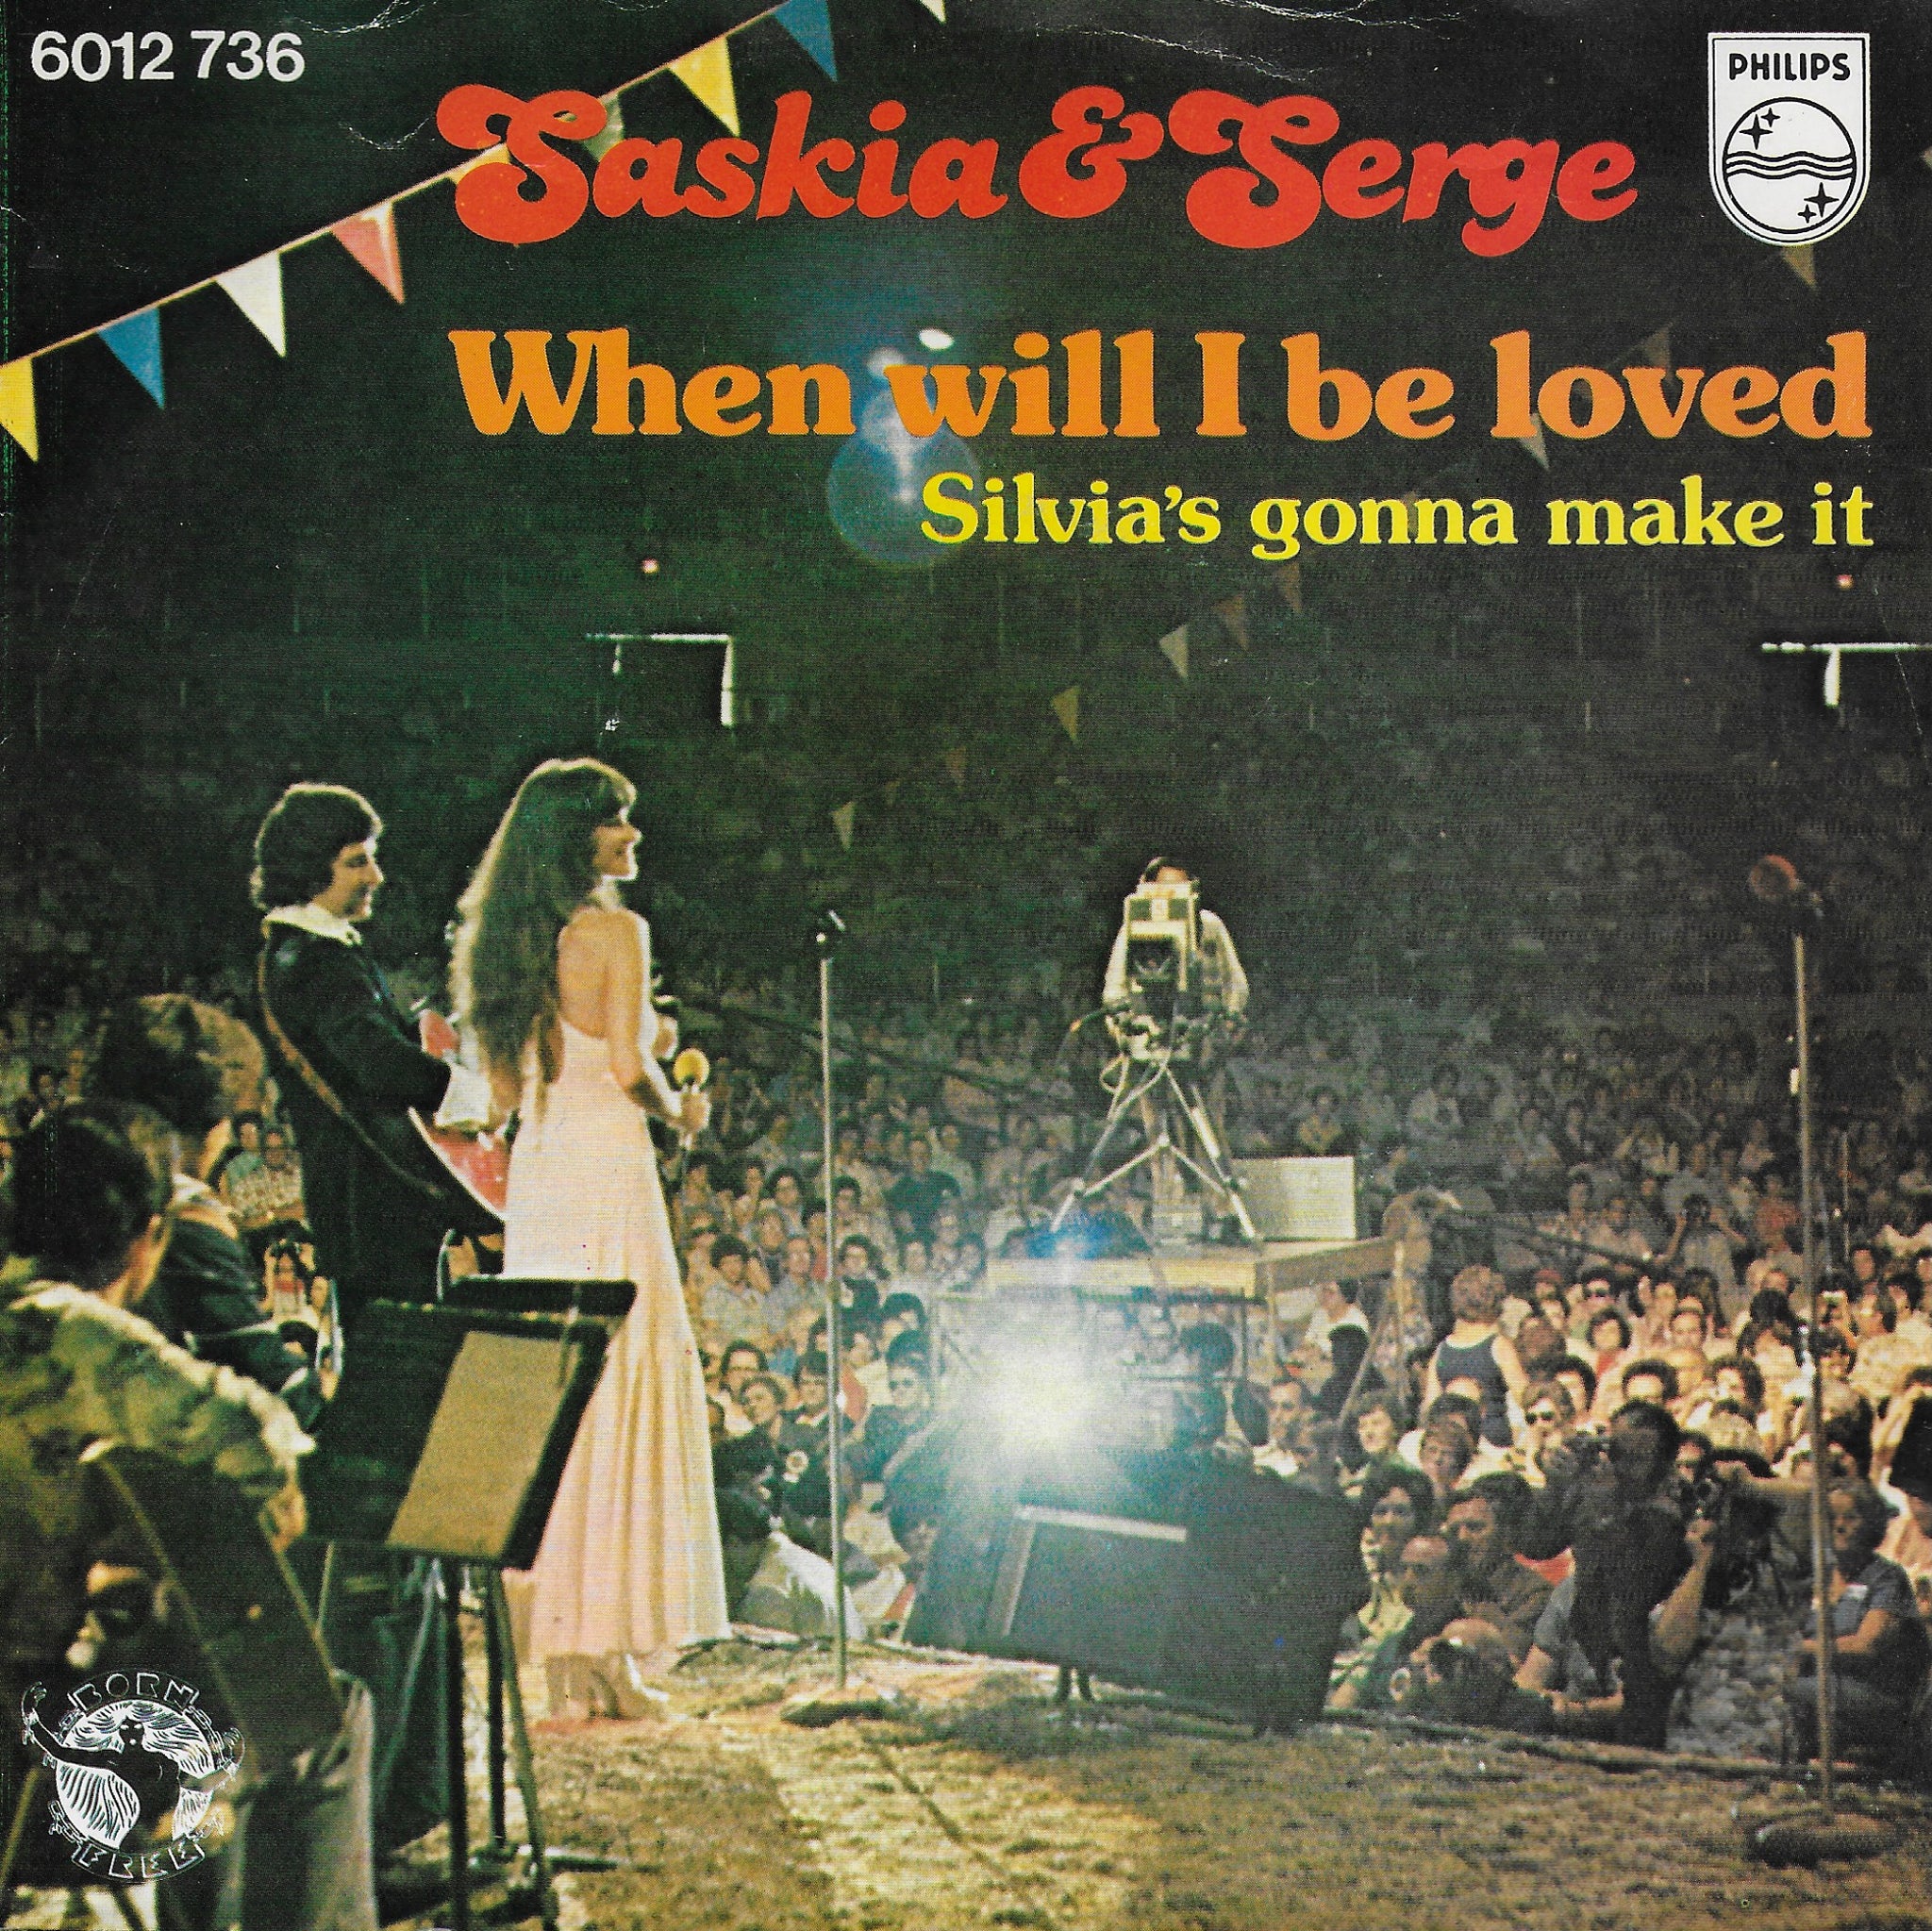 Saskia & Serge - When will i be loved